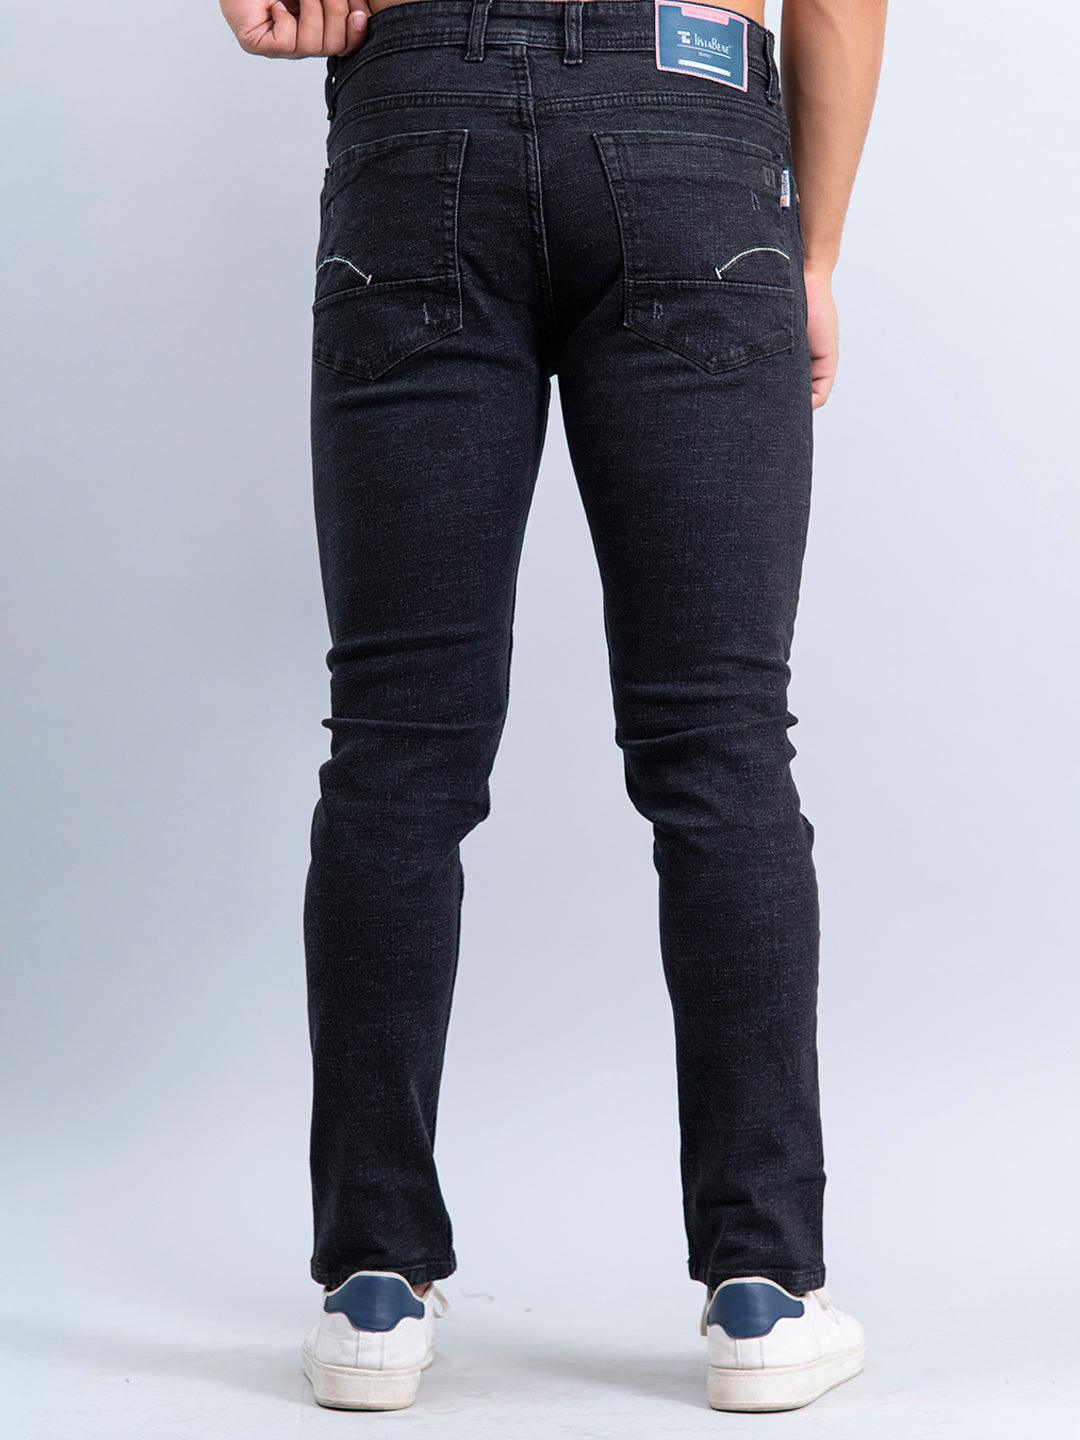 Black Denim Ankle Length Stretchable Men's Jeans - Tistabene